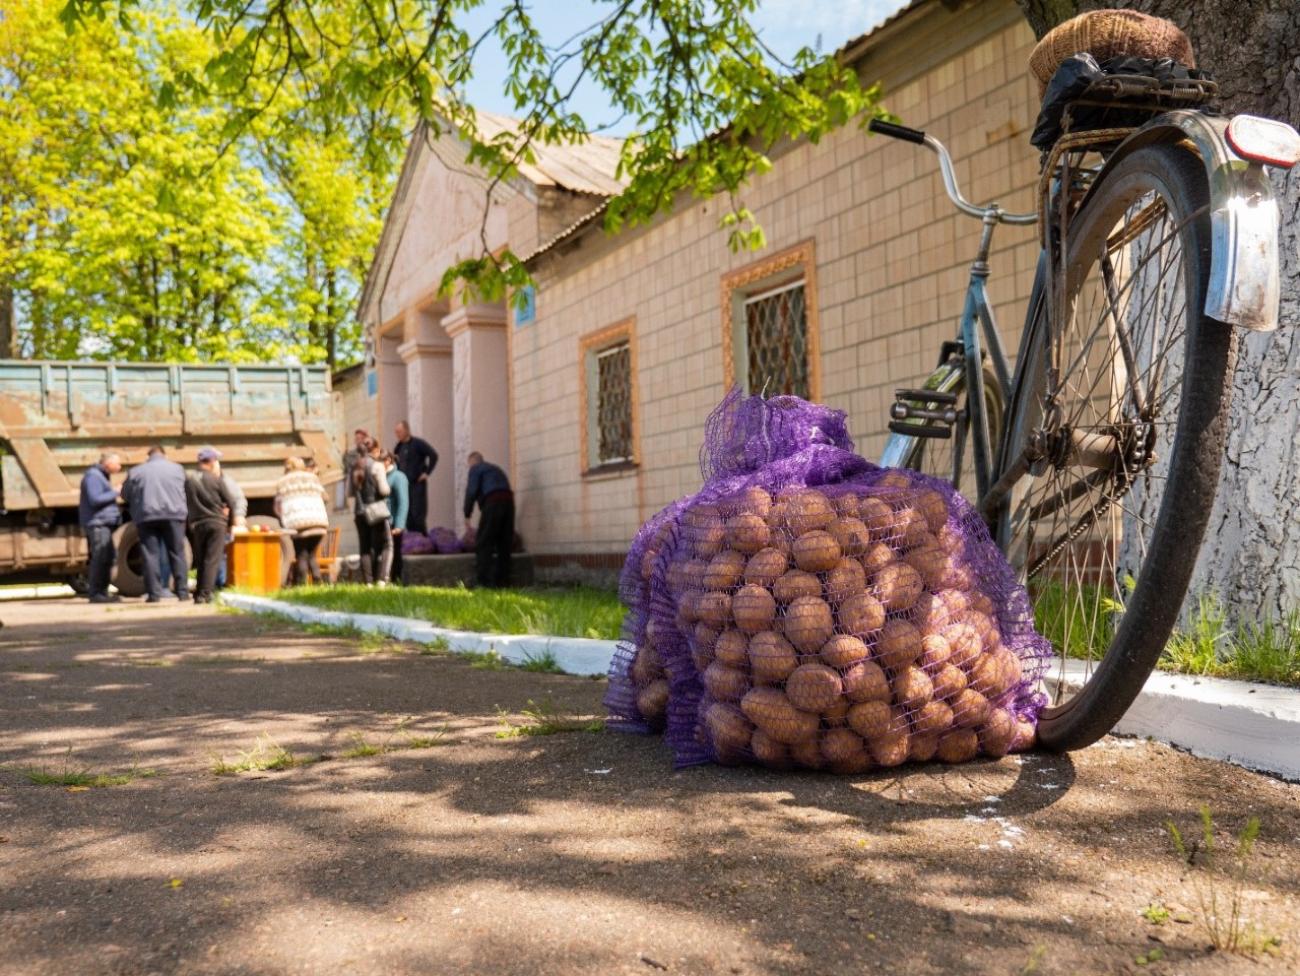 Seed potato distribution in Dnipropetrovska oblast, Ukraine